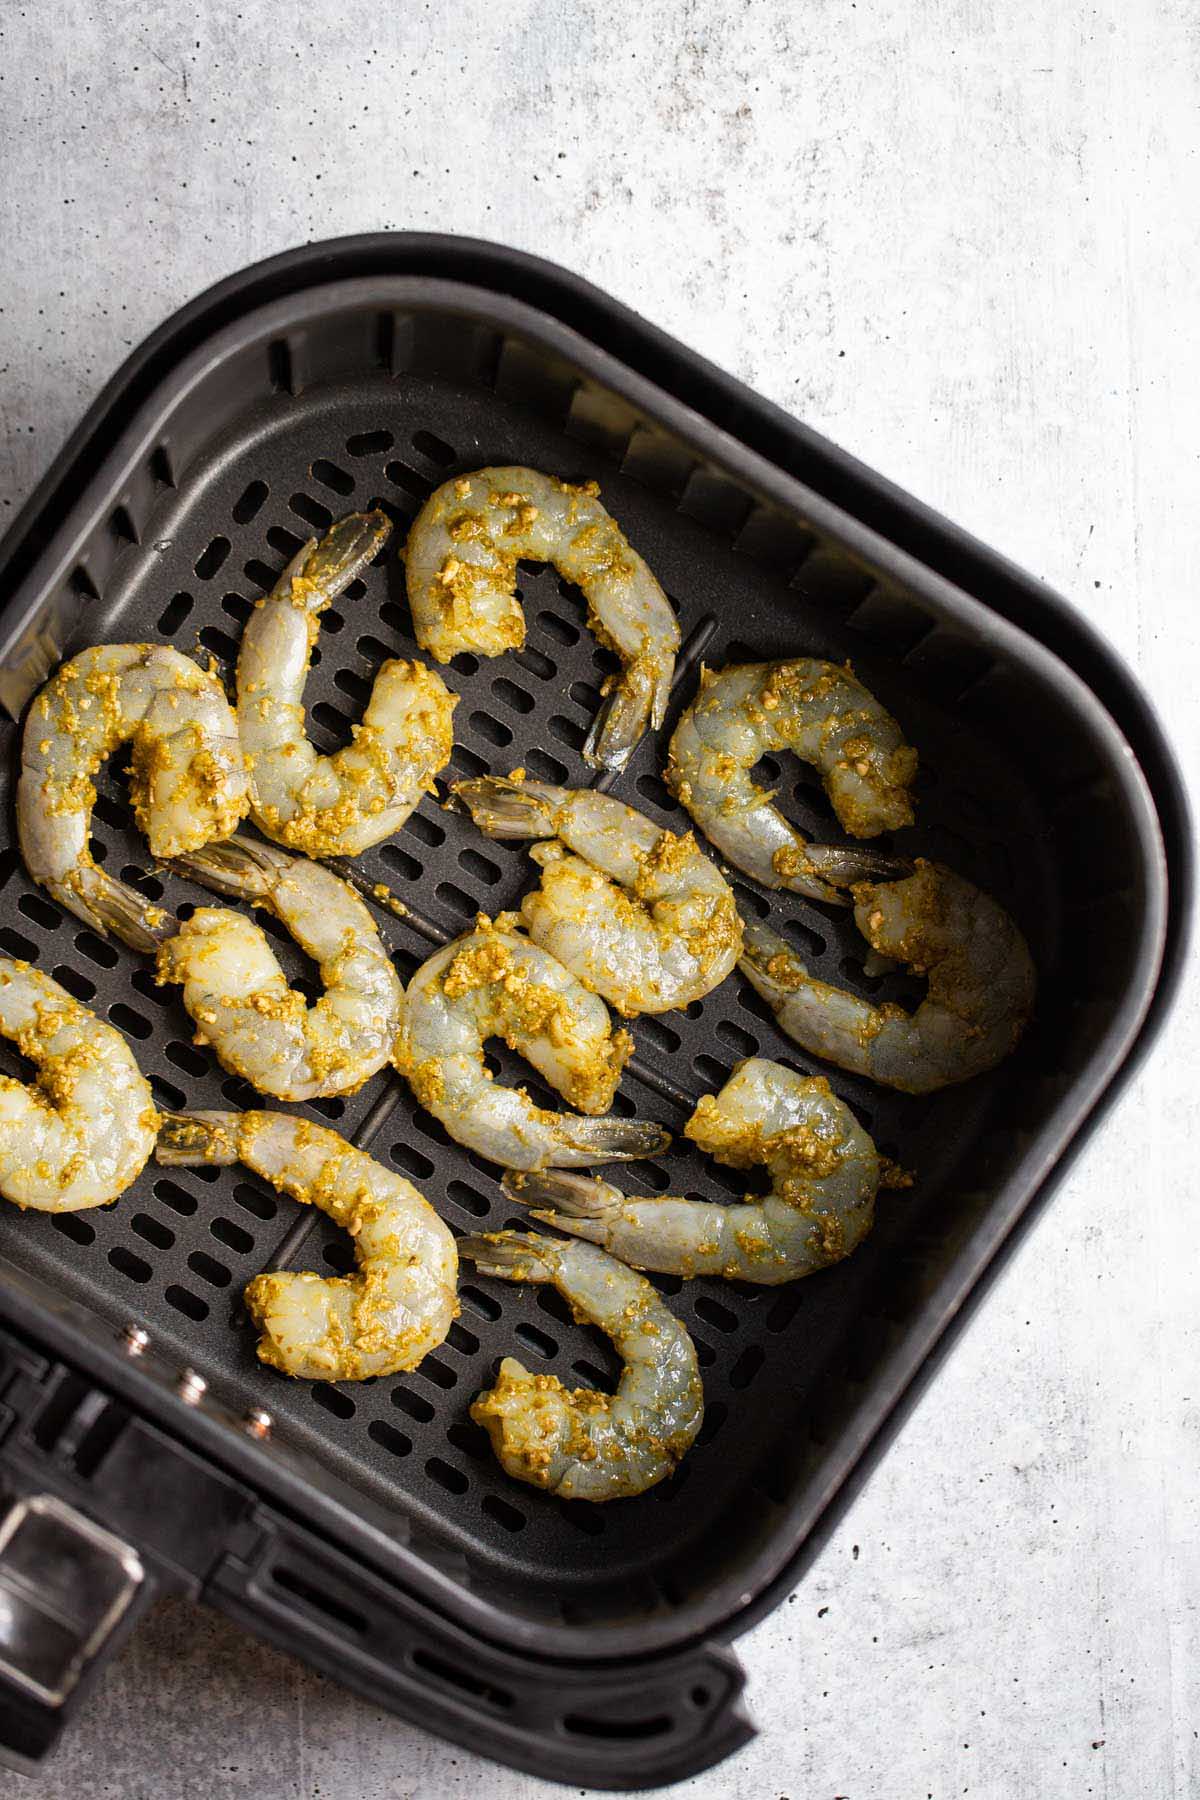 Uncooked shrimp in air fryer basket.